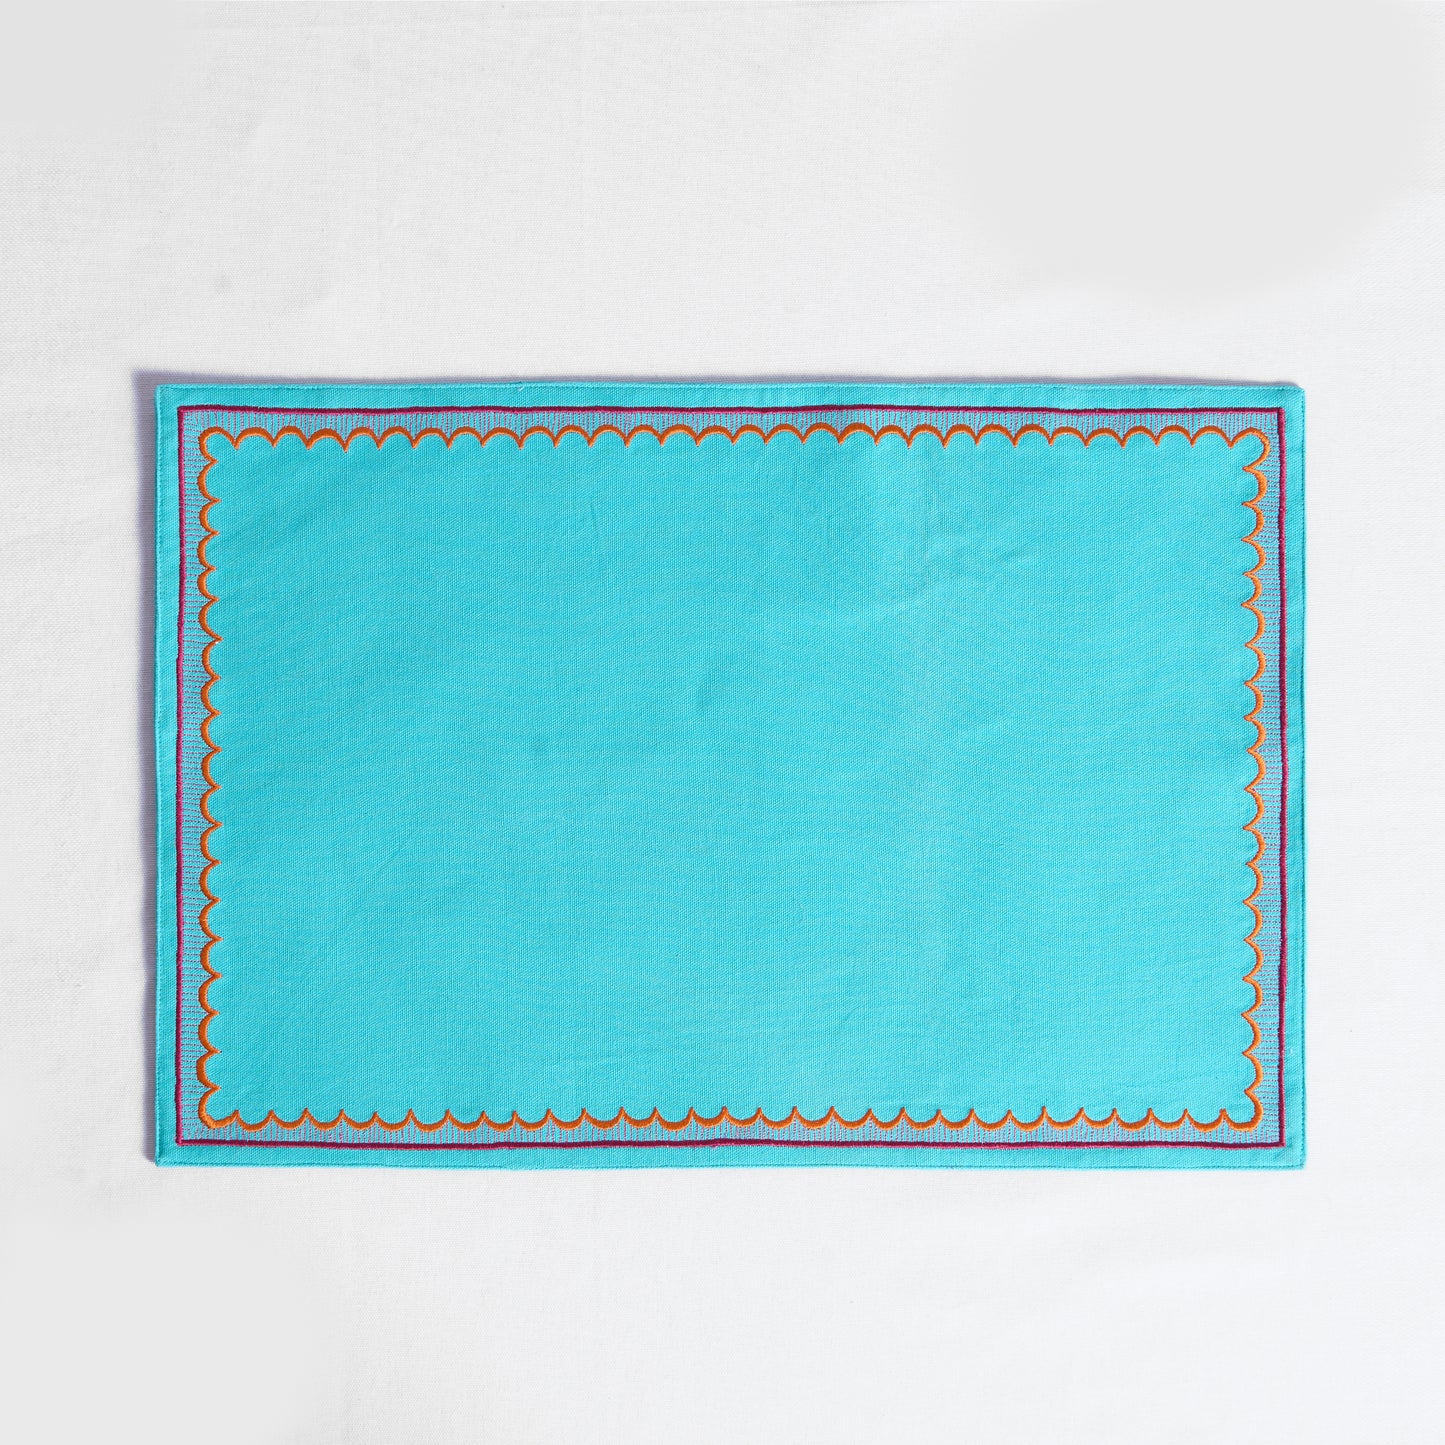 KASHIDAKAARI - Turquoise, scallop pattern, embroidered placemats